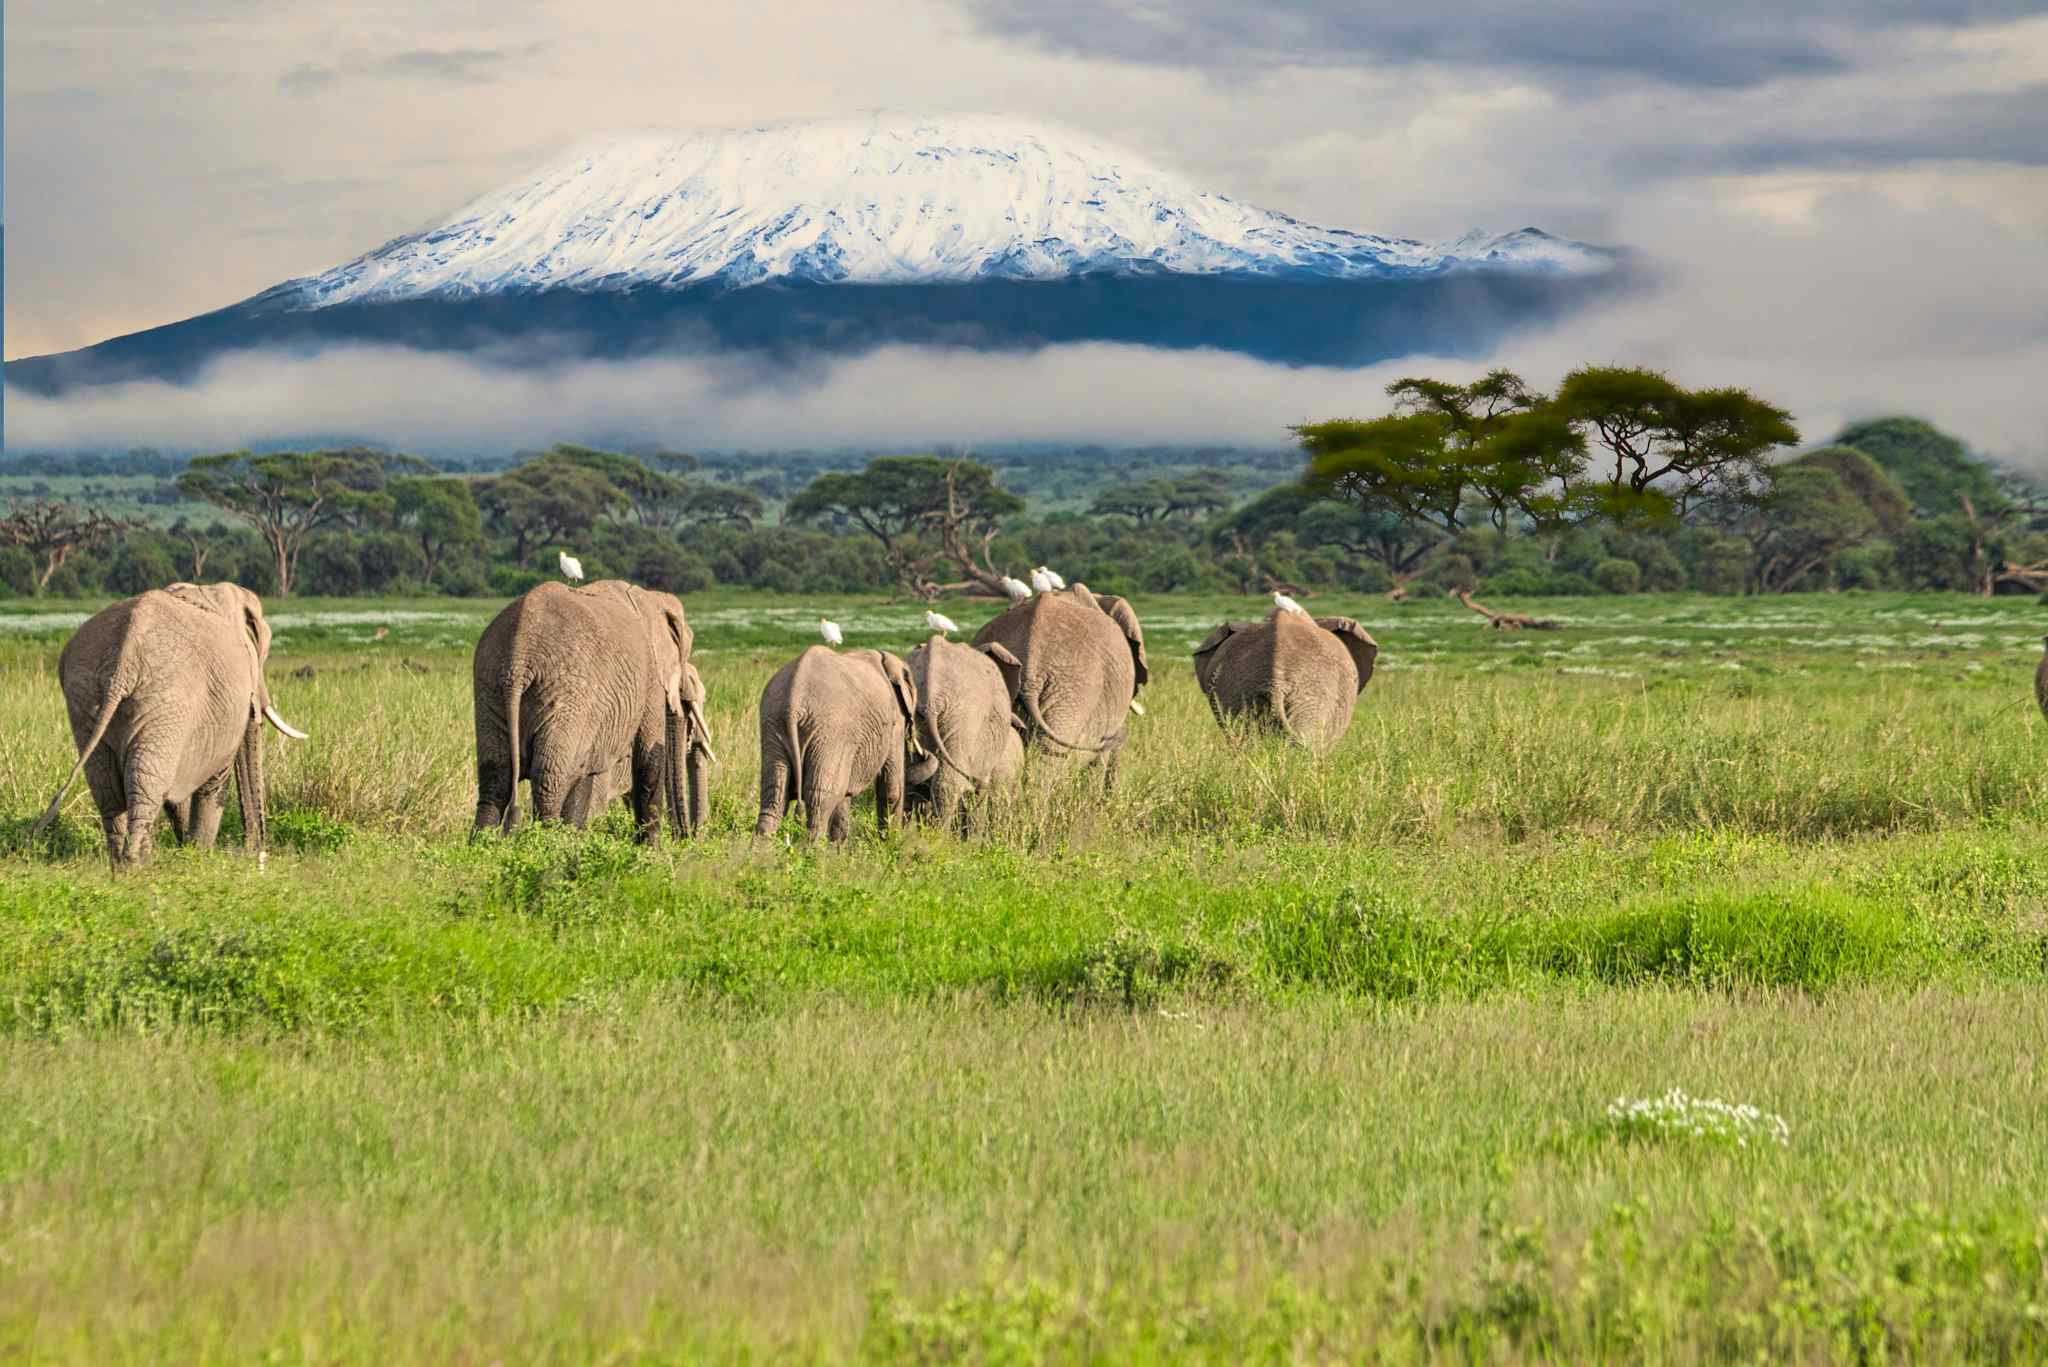 Six elephants walking towards a backdrop of Mount Kilimanjaro and acacia trees, Tanzania.